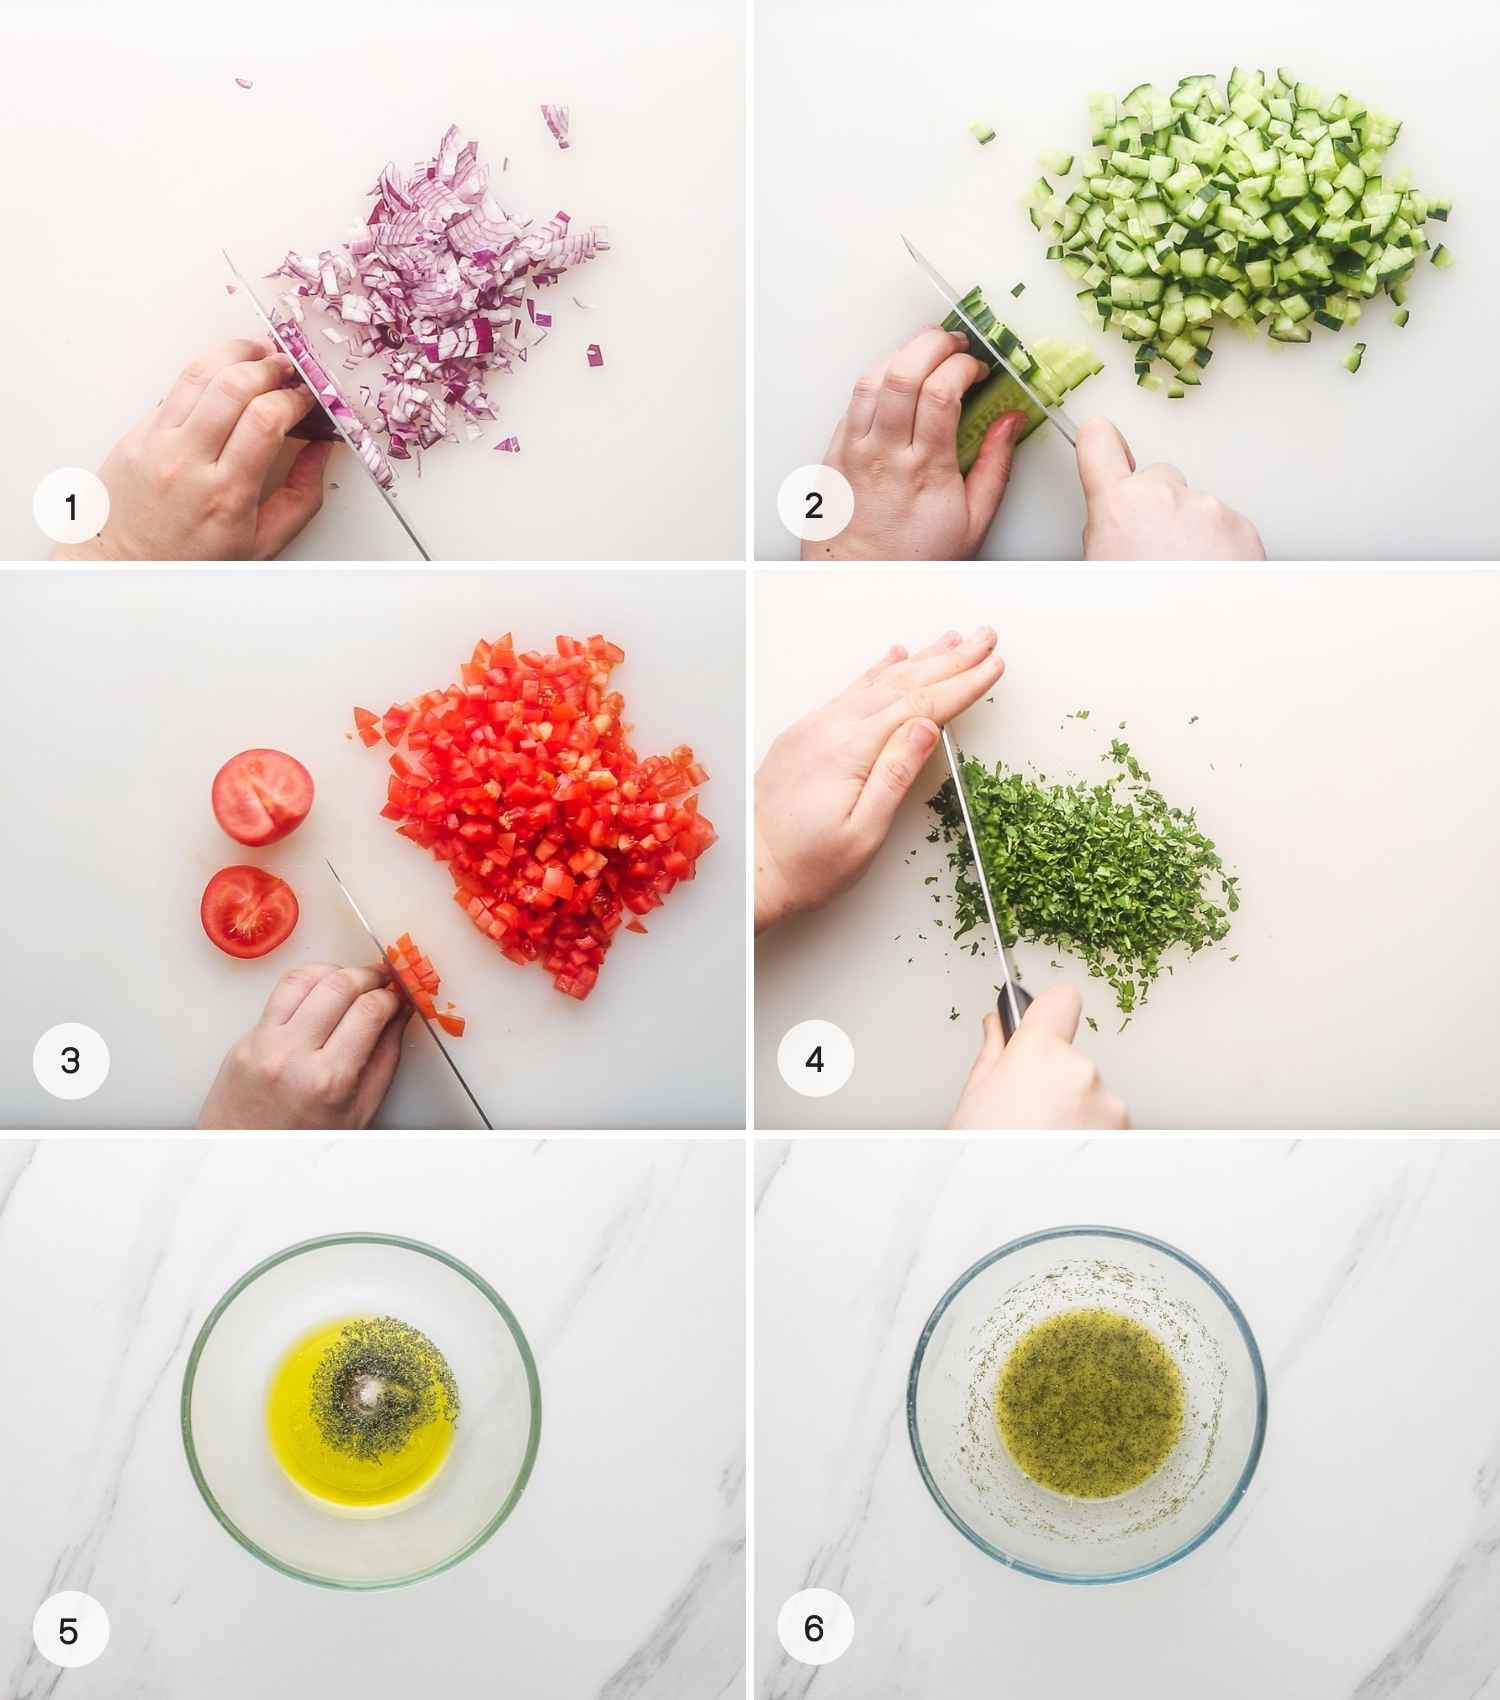 Steps on how to make shirazi salad - chop vegetables and make dressing